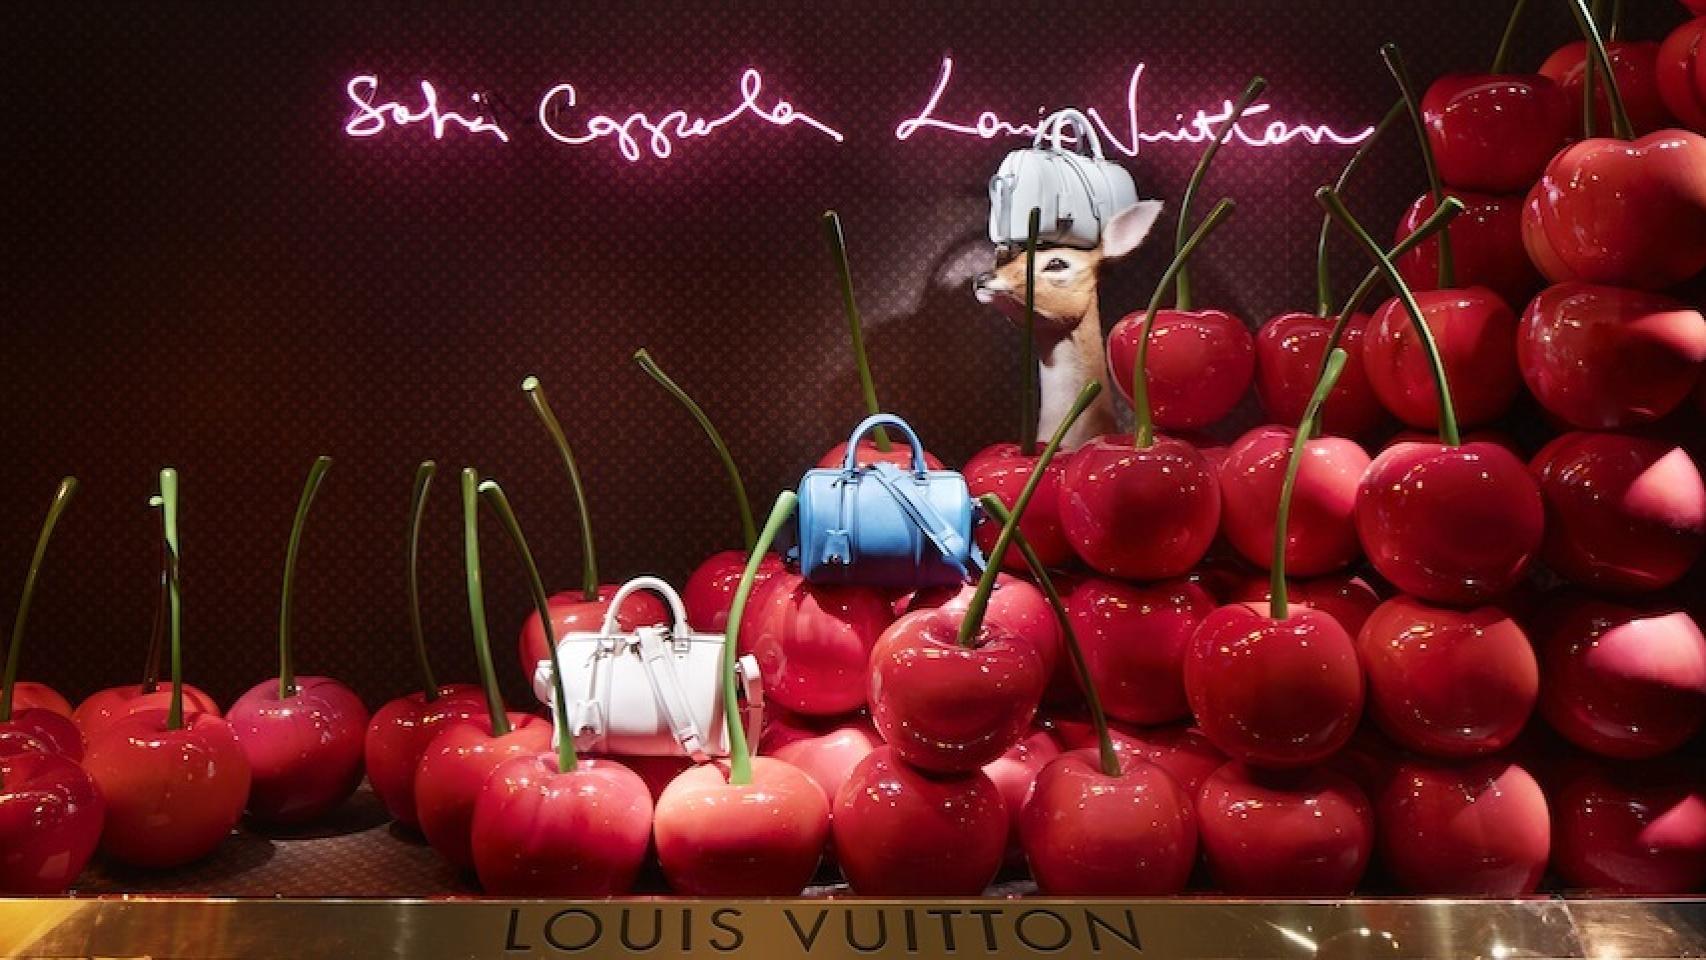 LOUIS VUITTON - Louis Vuitton Valores EL ARTE DE LOS ESCAPARATES DE GASTON  LOUIS VUITTON